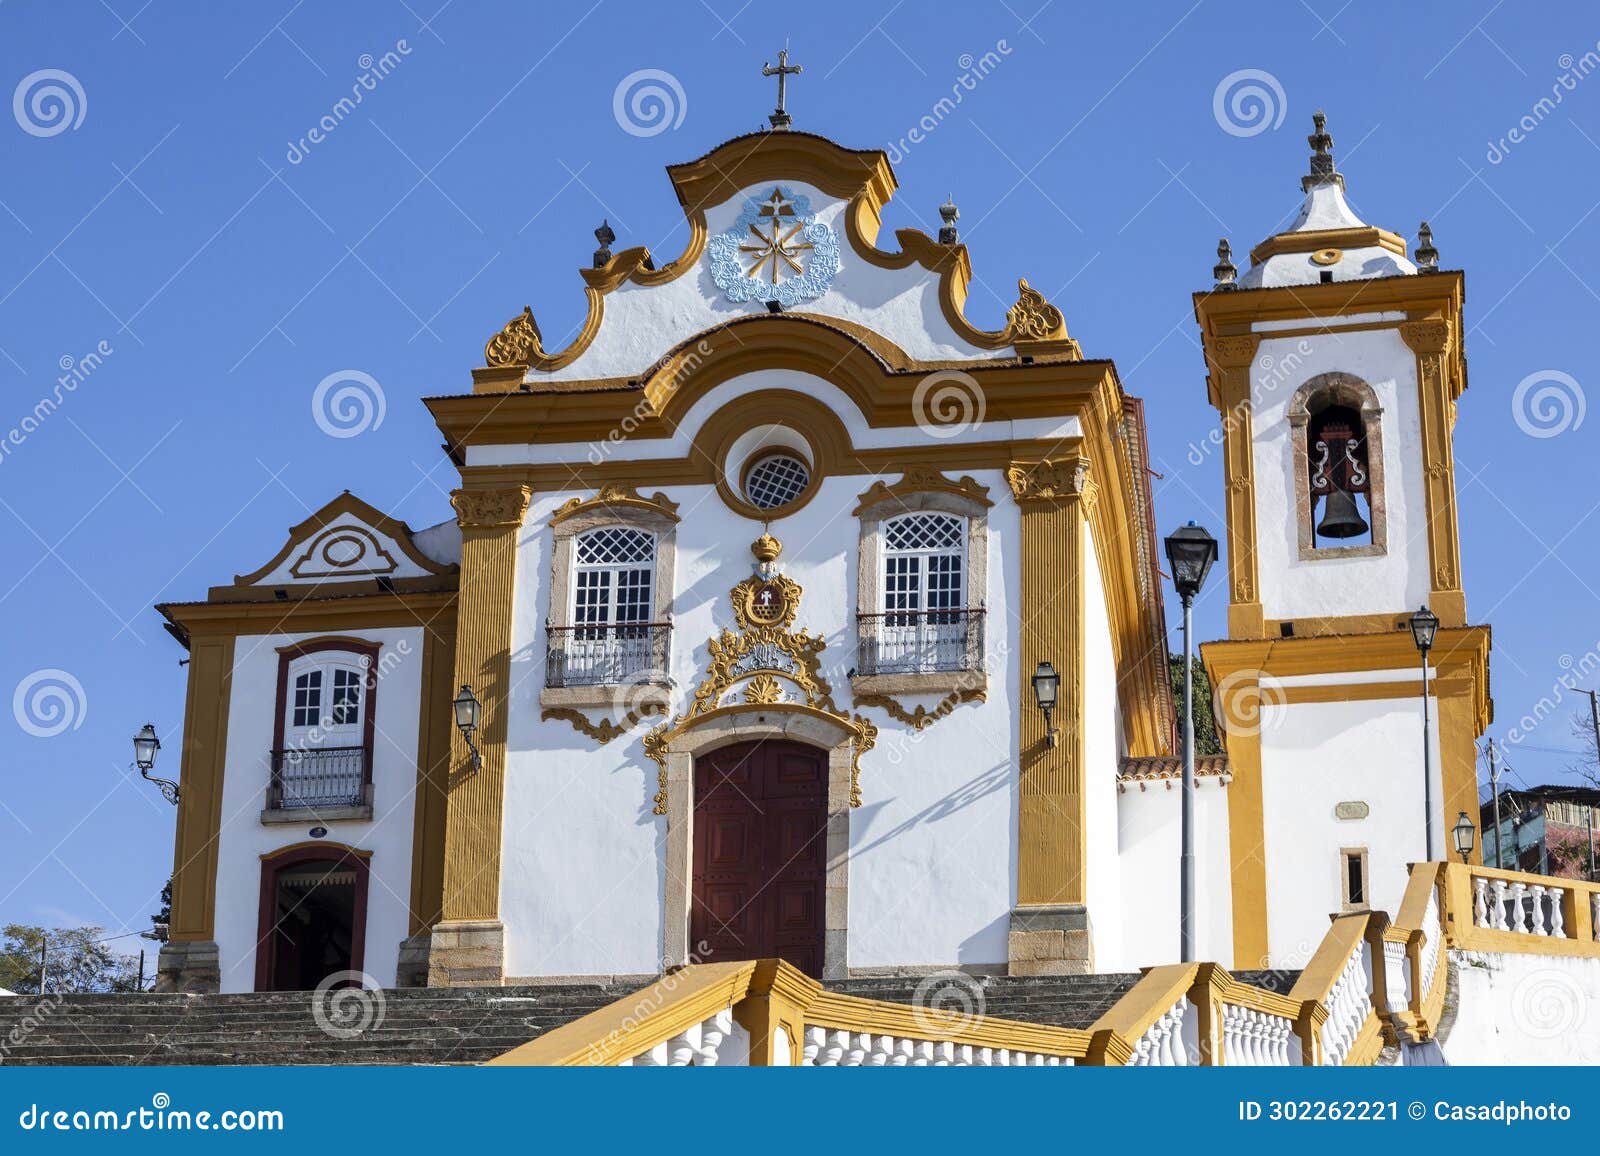 baroque church of nossa senhora das merces in the historic center of sao joao del rei